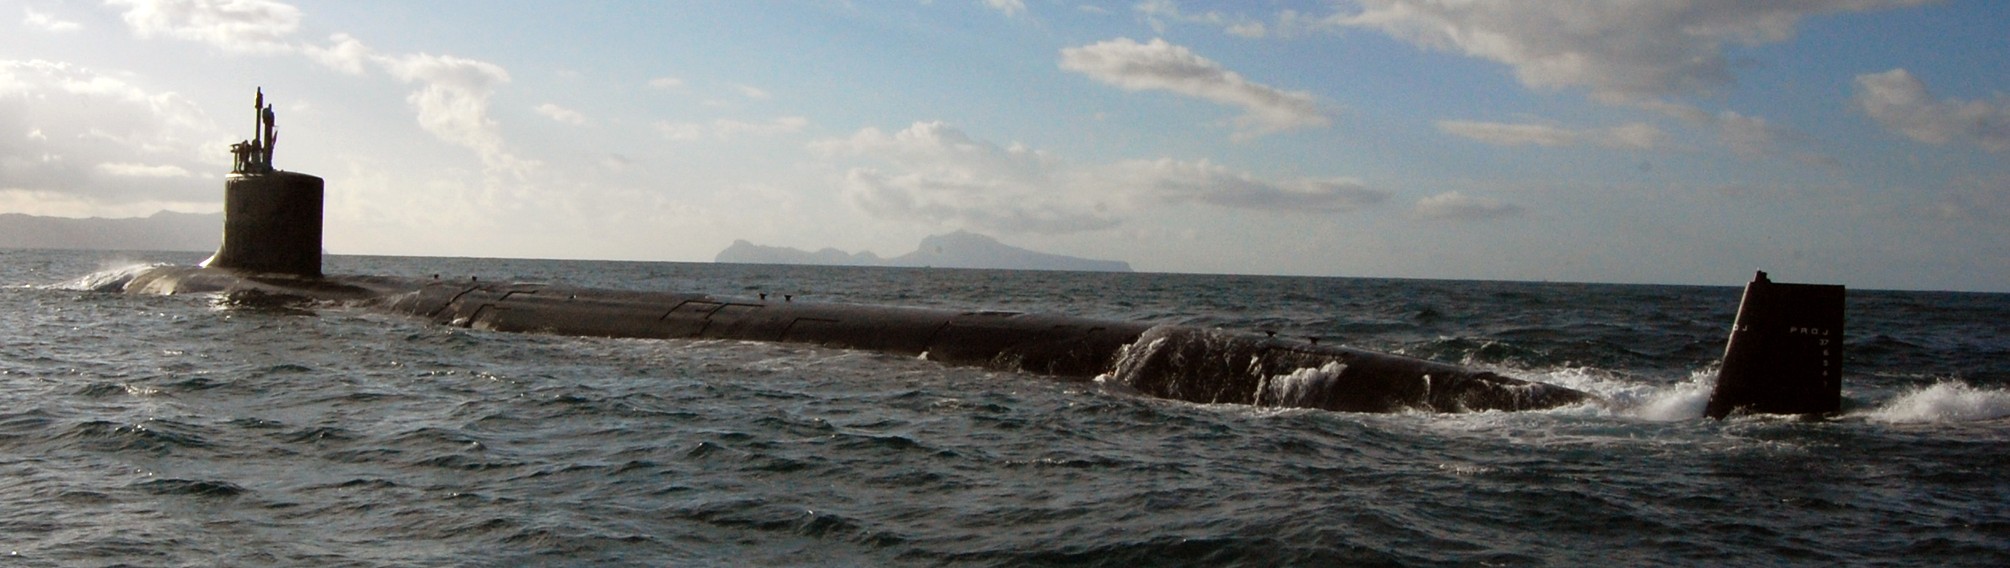 ssn-774 uss virginia attack submarine navy 2010 20 mediterranean sea